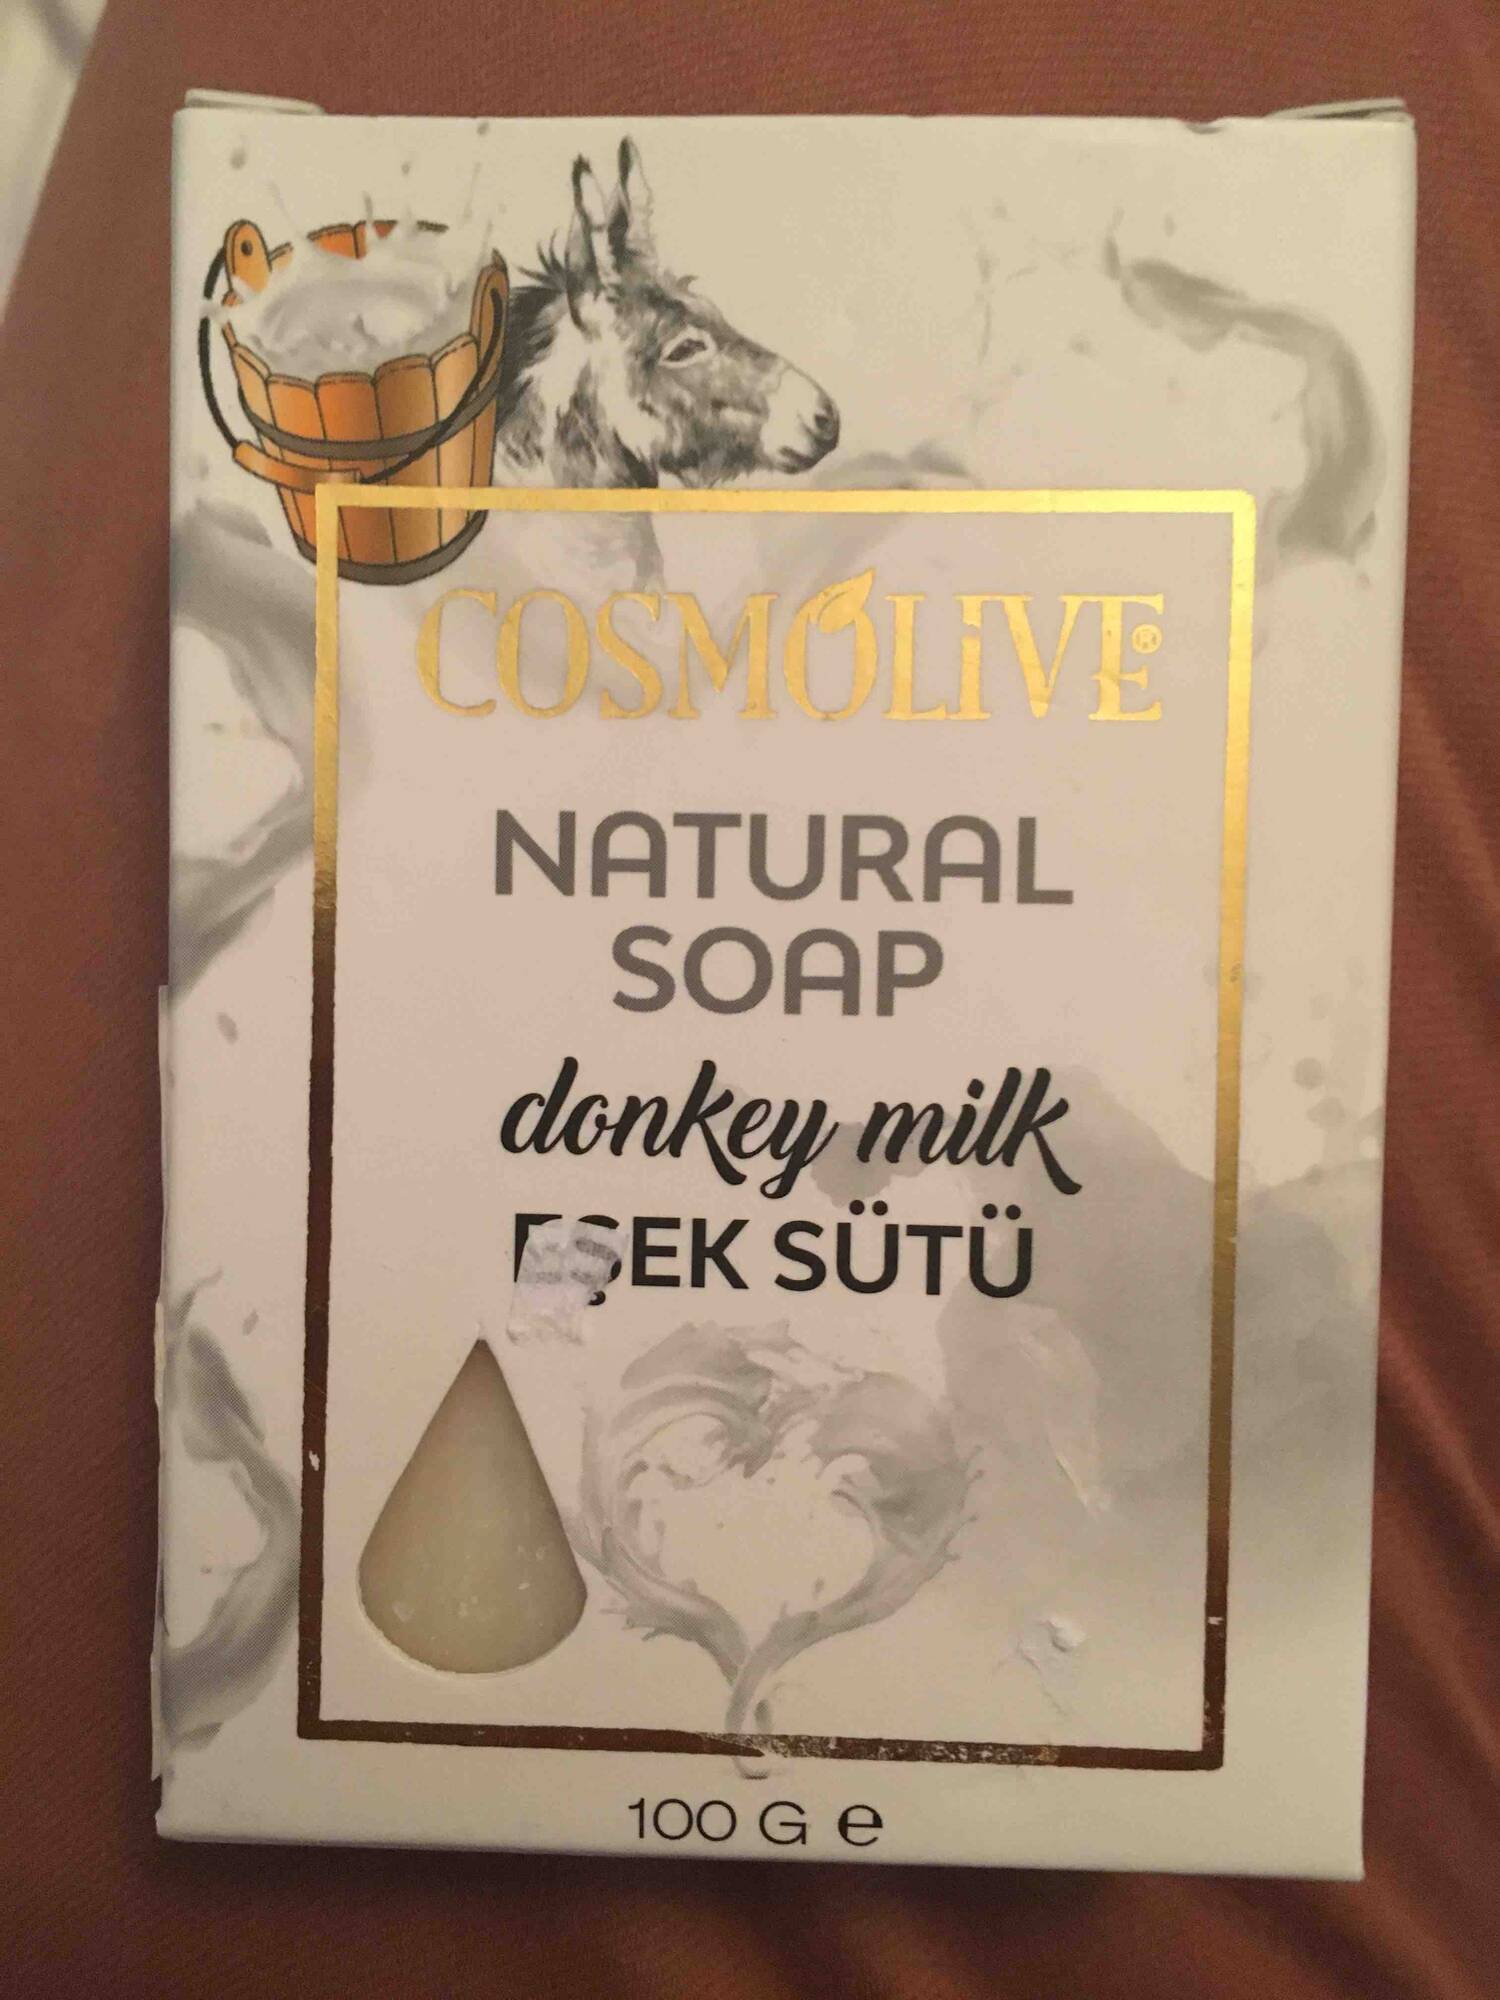 COSMOLIVE - Donkey milk - Natural soap